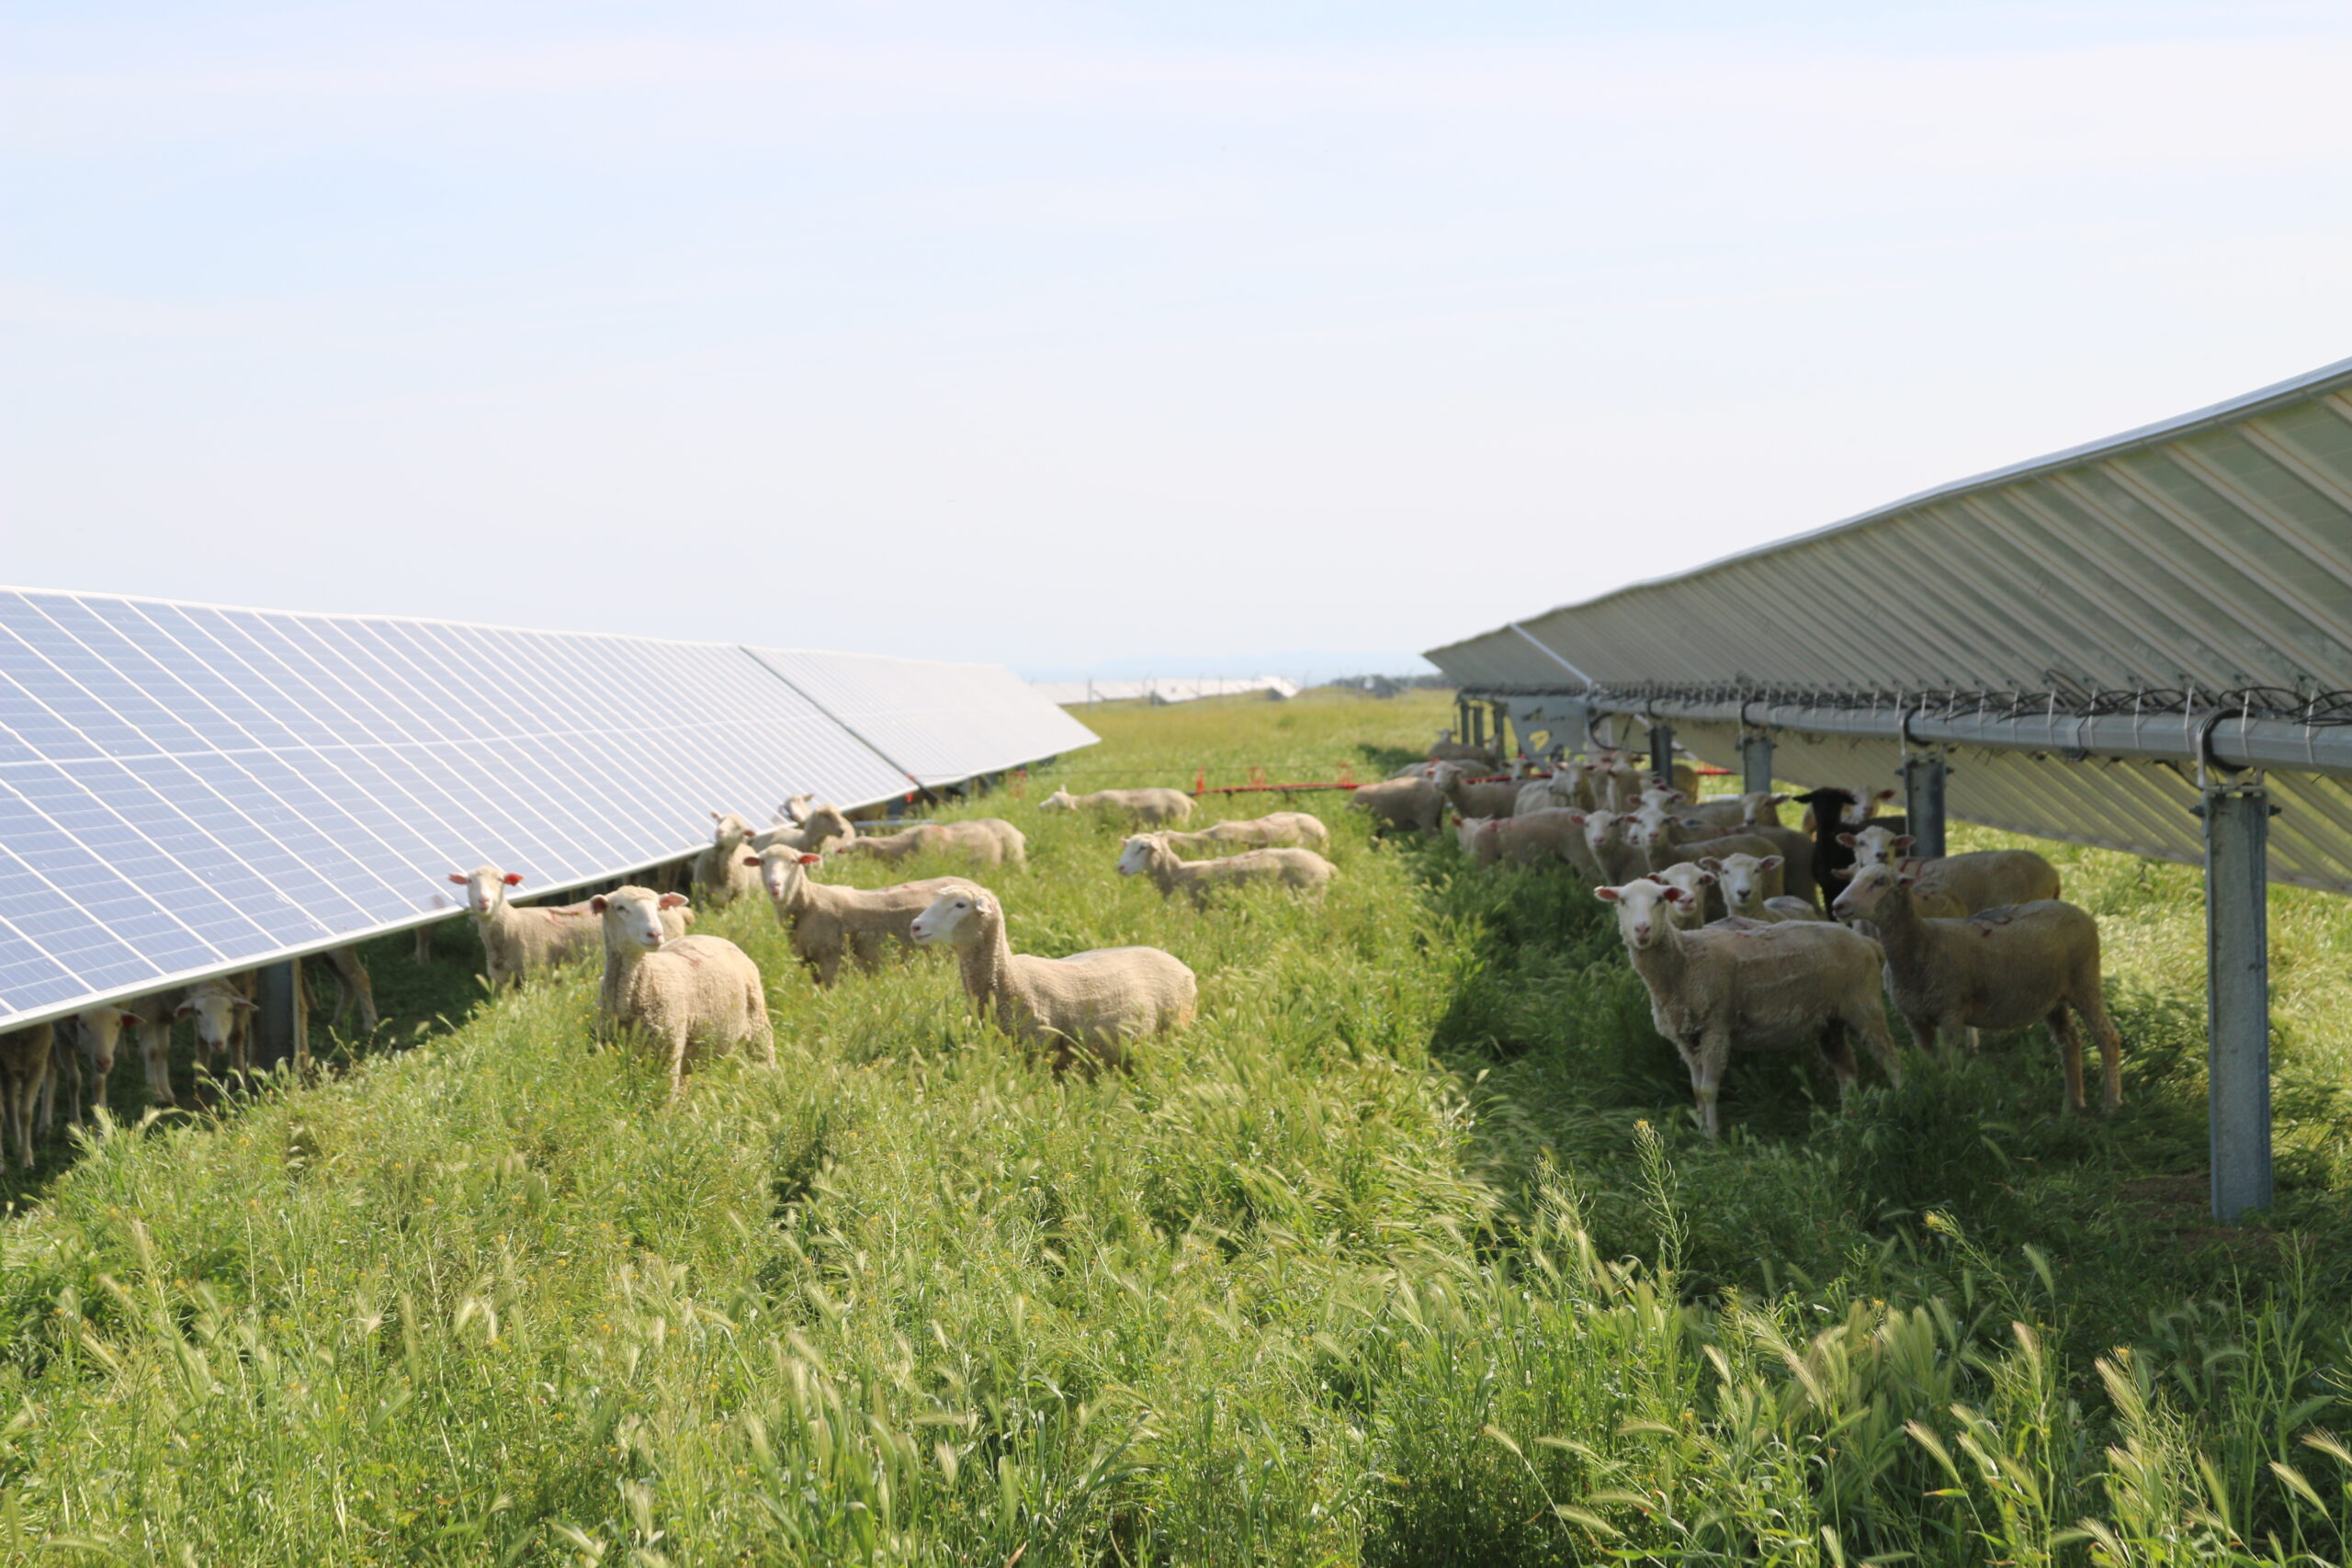 Solar Grazing – A triple win for communities